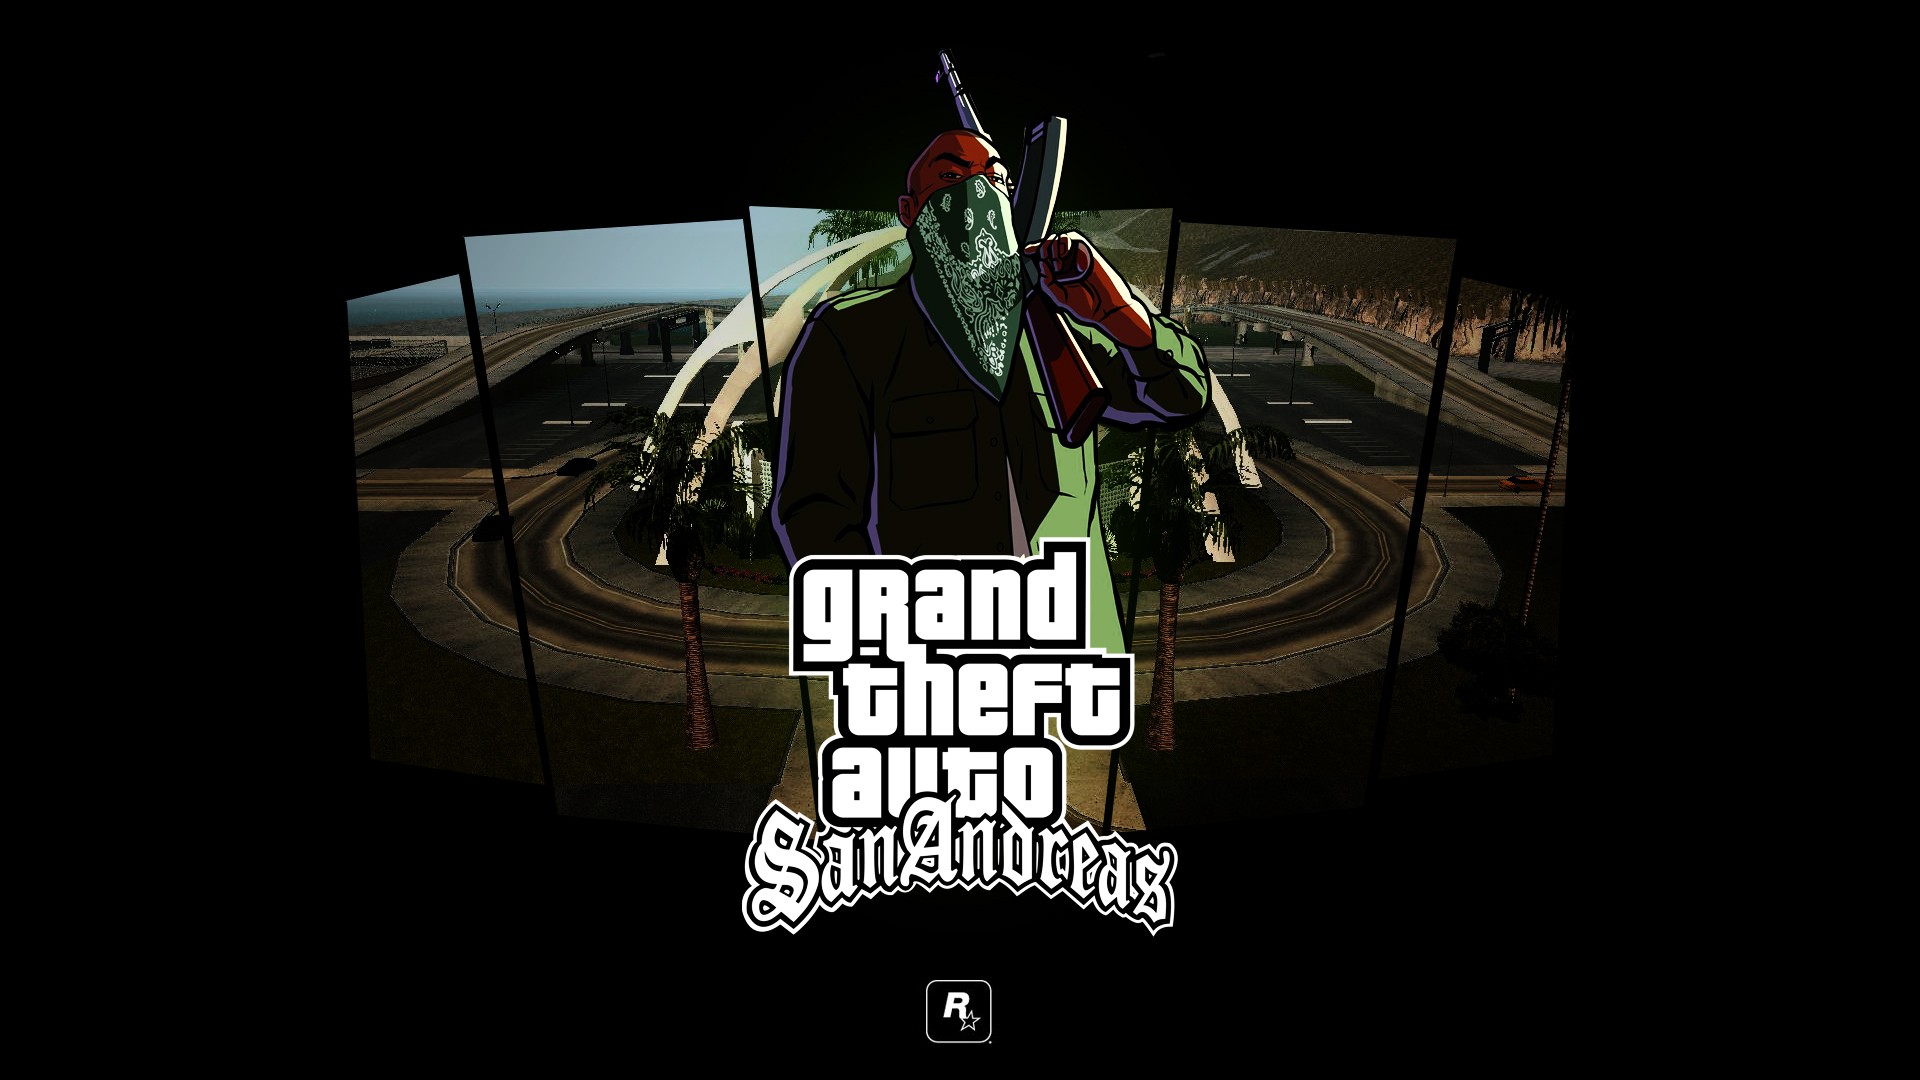 Grand Theft Auto San Andreas, Rockstar Games, Video Games, PlayStation